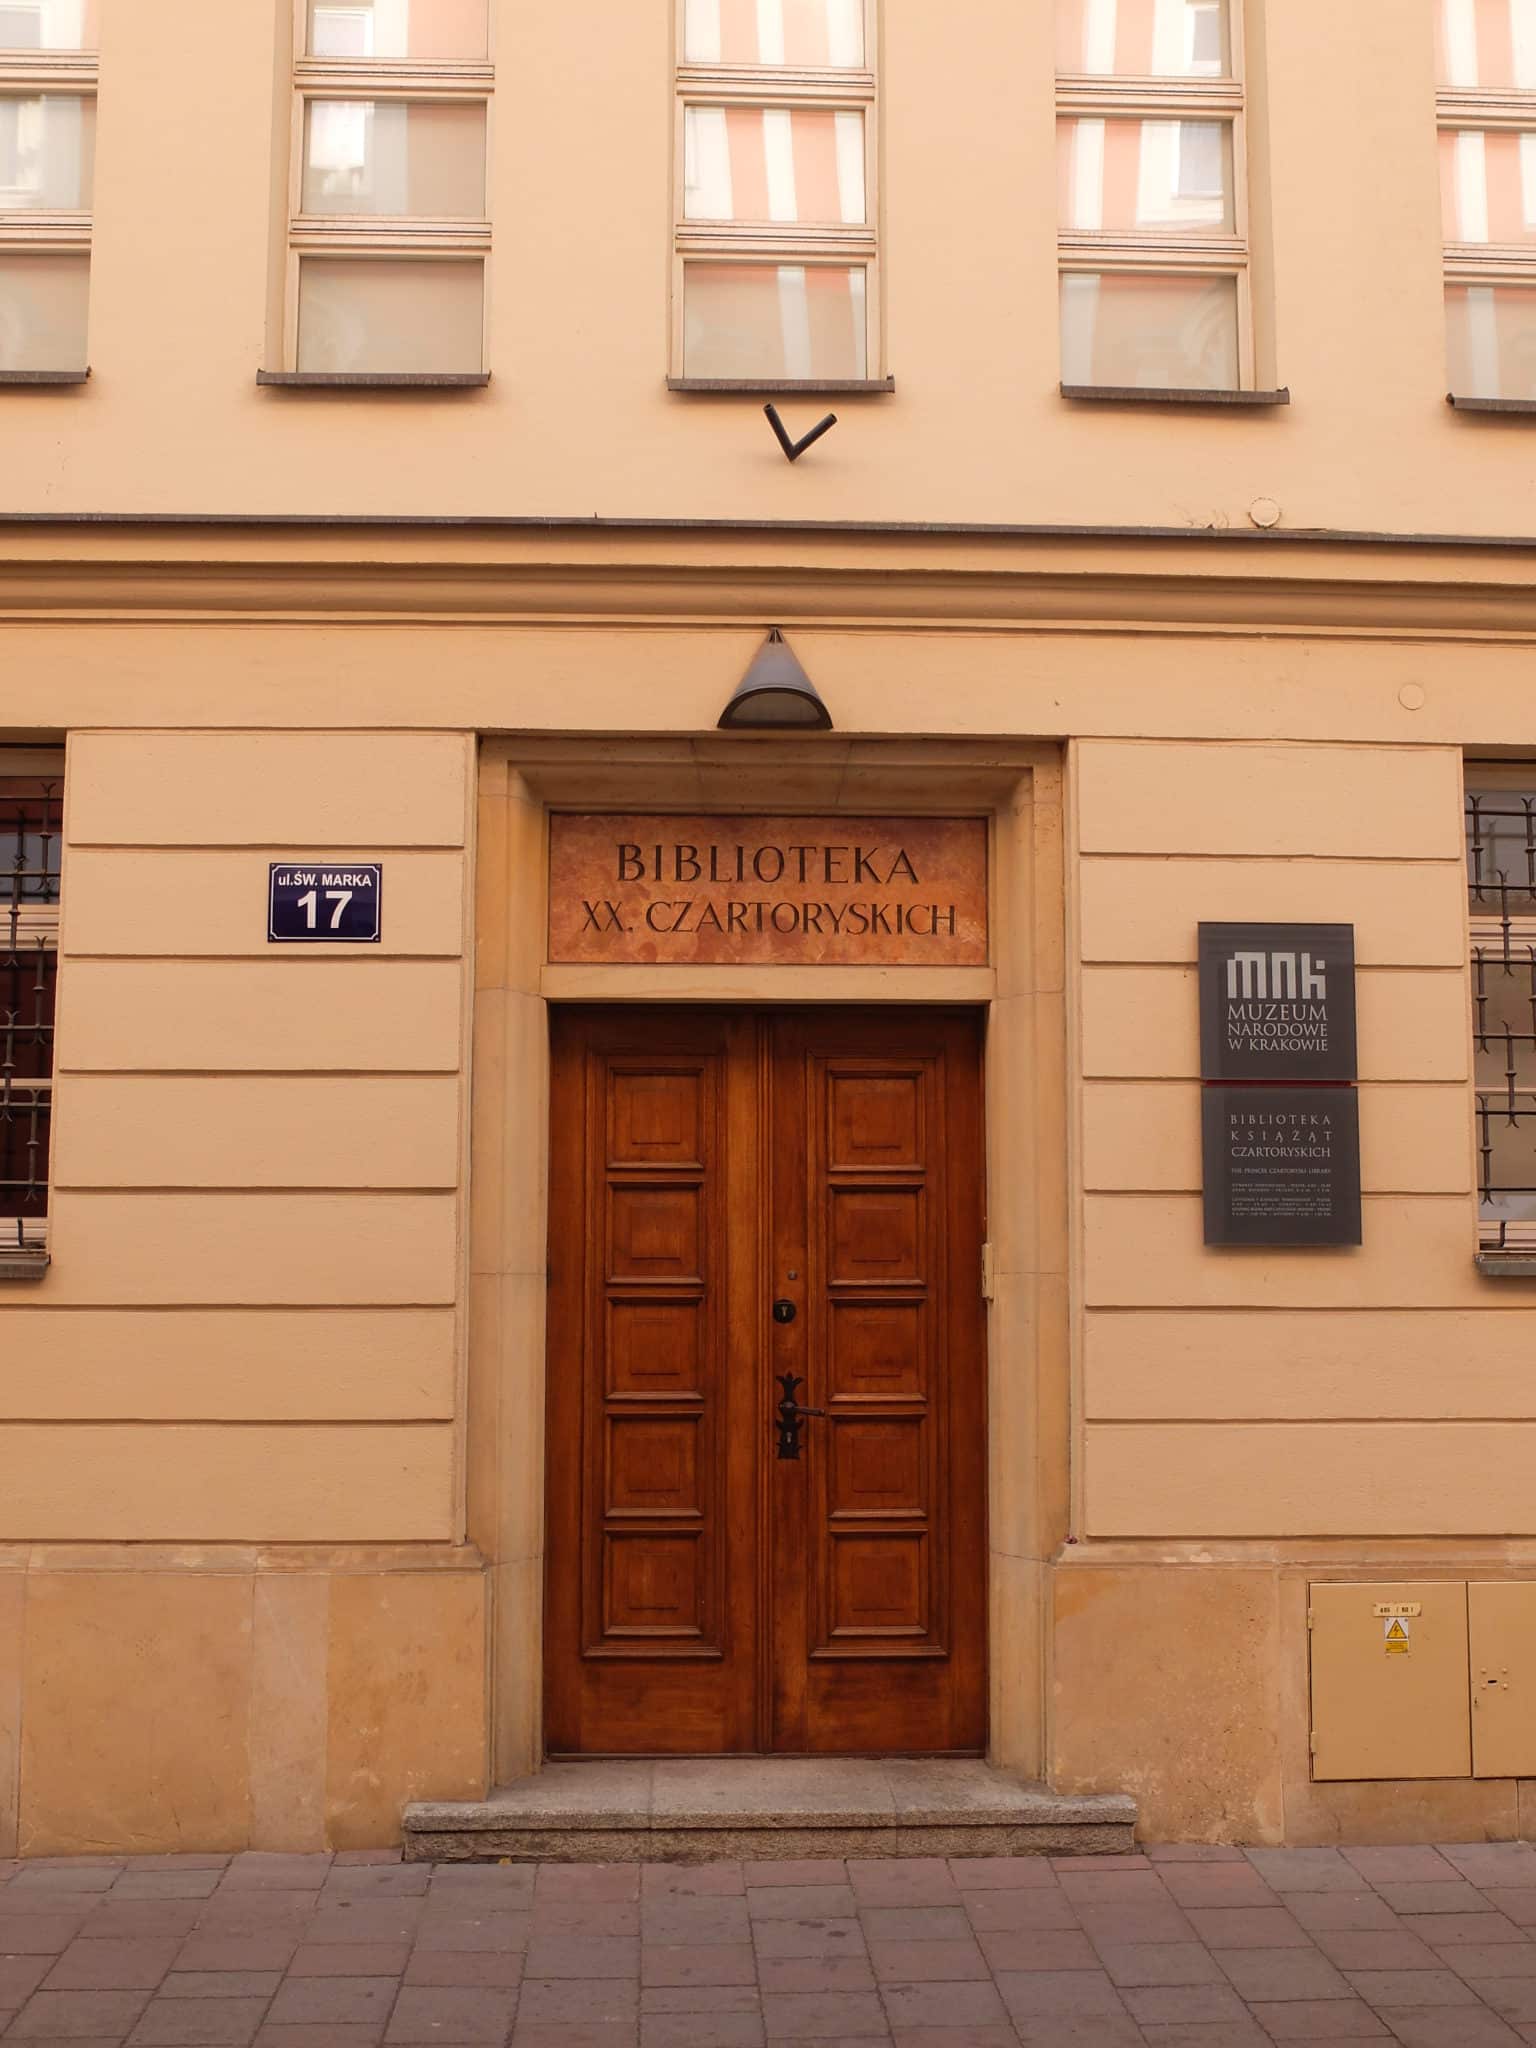 Entrance to the Princes Czartoryski Library, St. Mark Street in Krakow